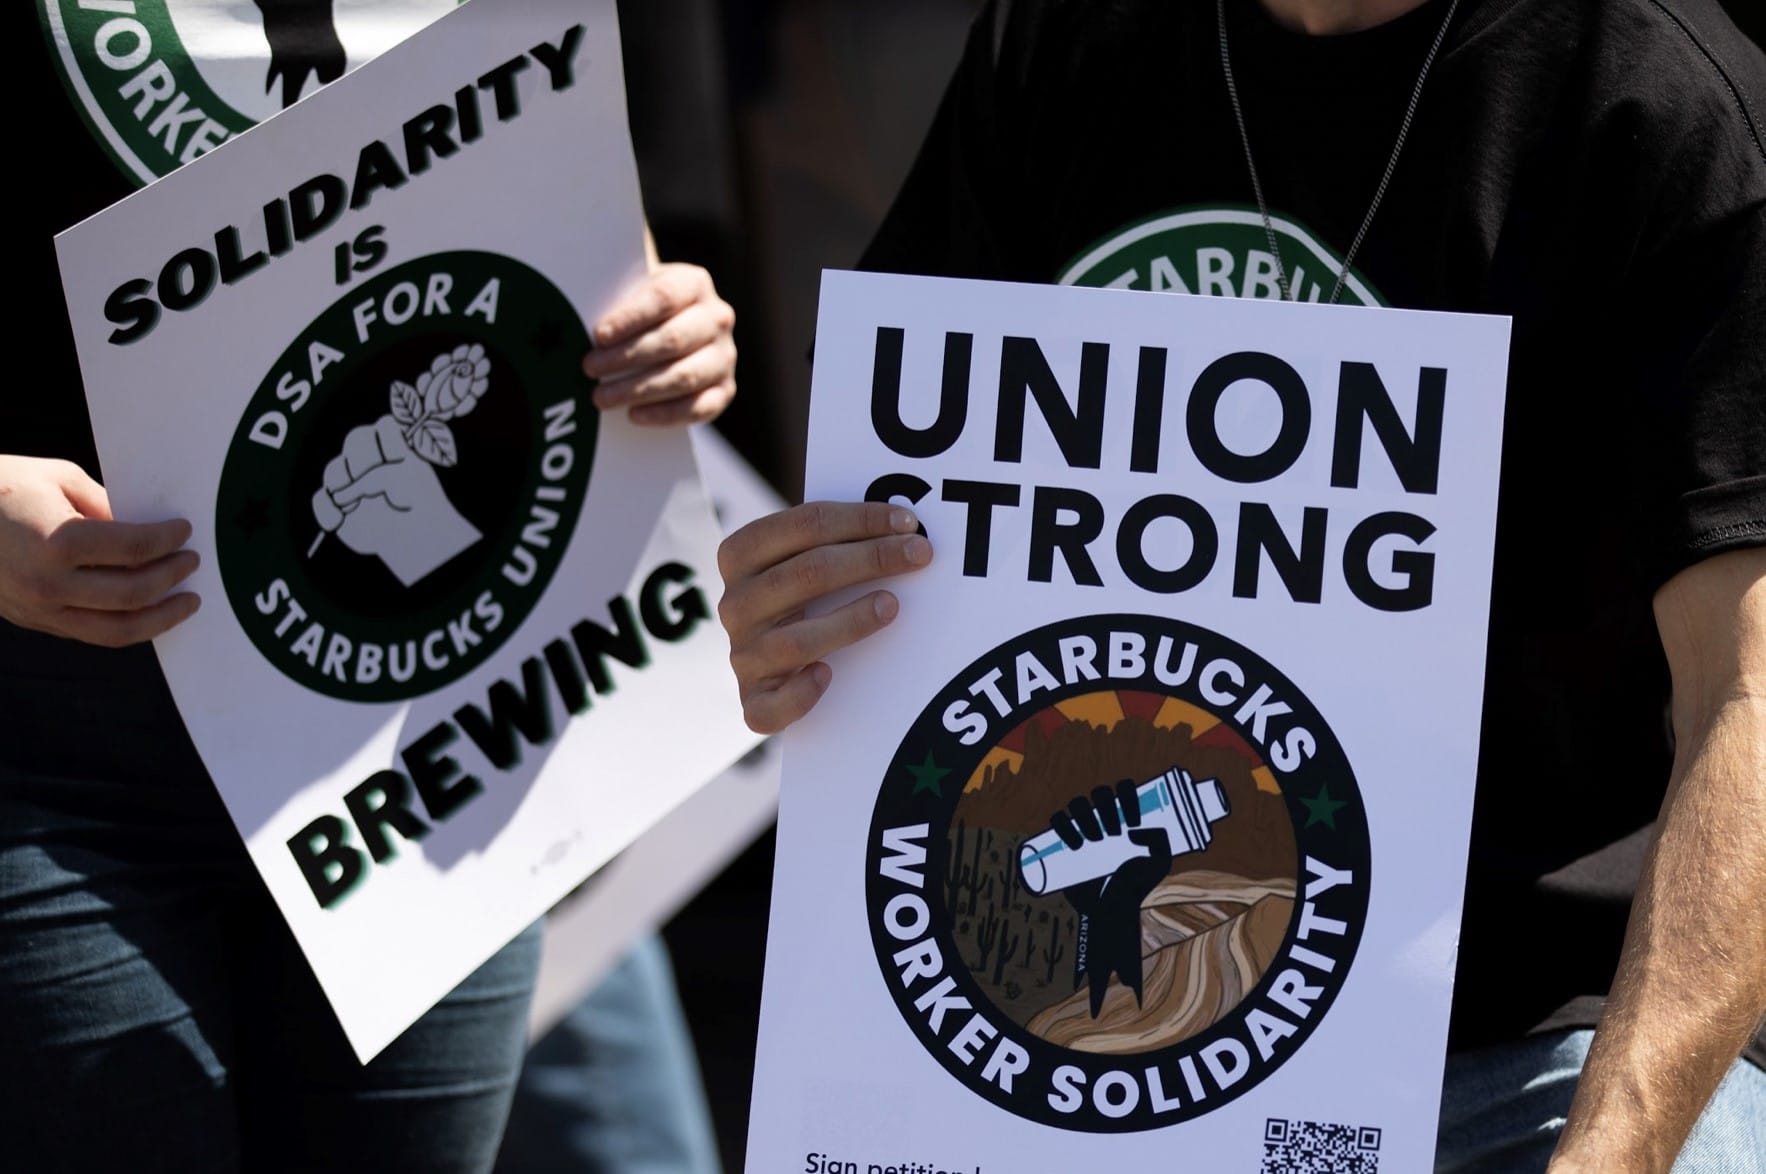 Starbucks fired Long Island union leader in retaliation, labor board